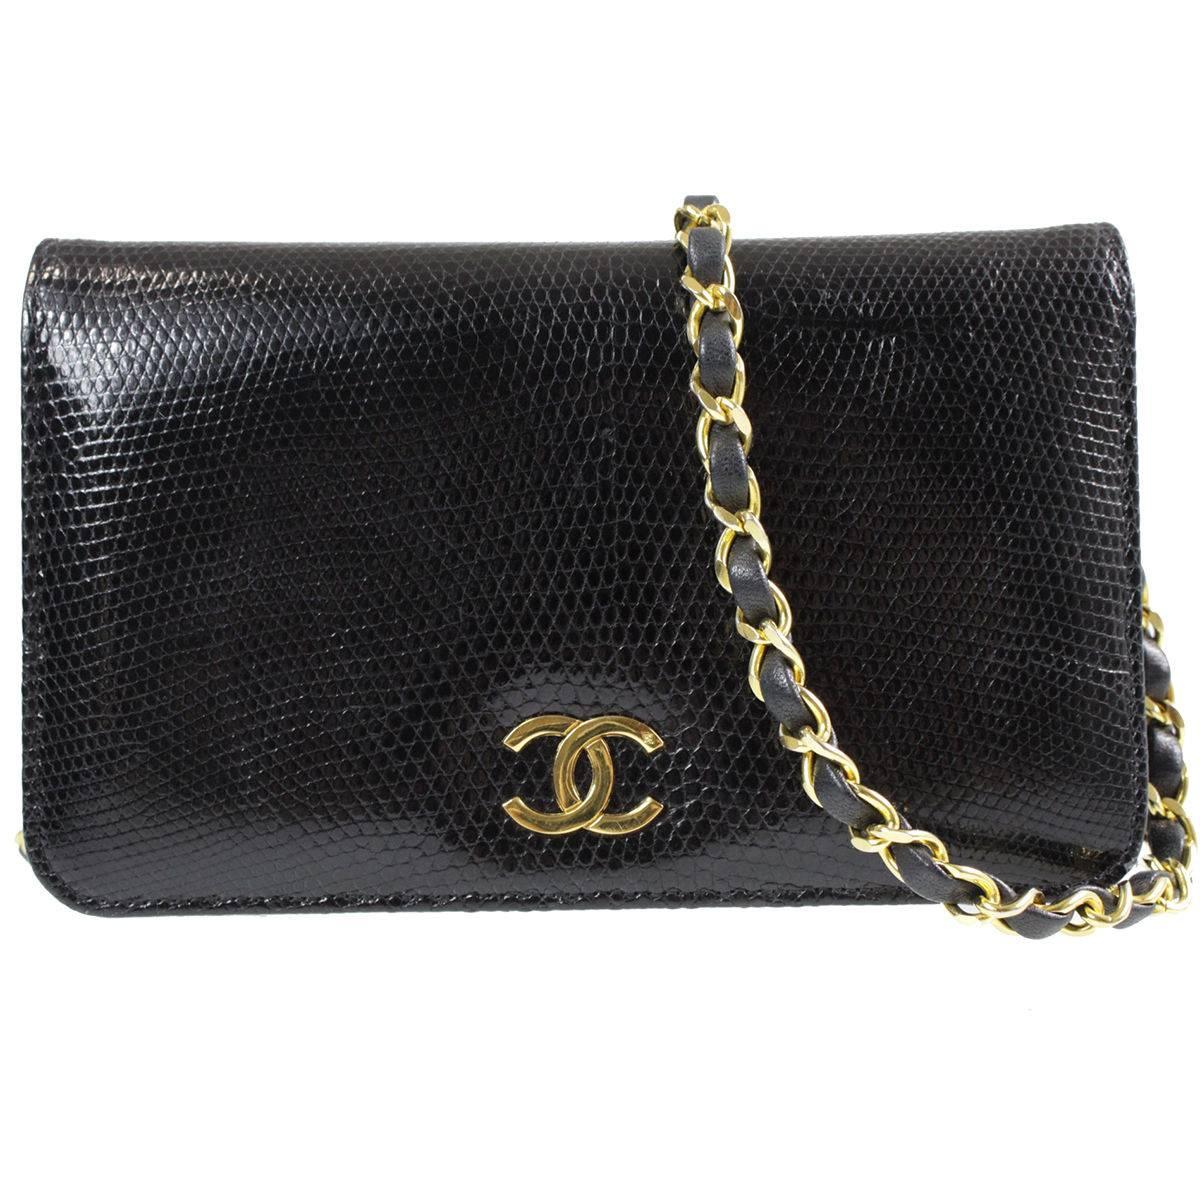 Chanel RARE Vintage Black Lizard Leather Gold CC Flap Crossbody Shoulder Bag